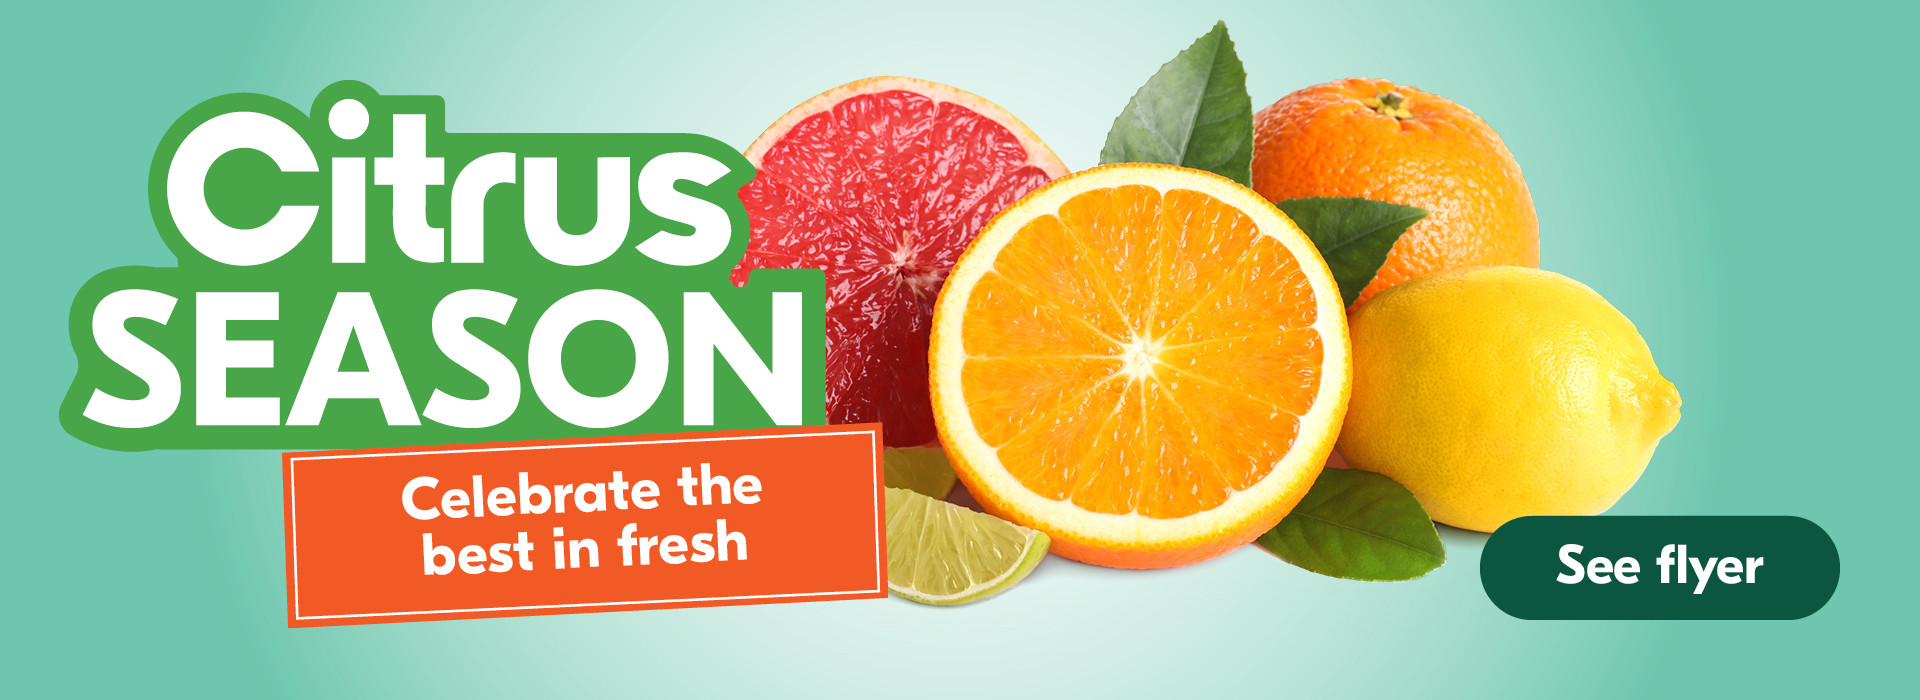 Citrus Season, Celebrate the best in fresh. See Flyer